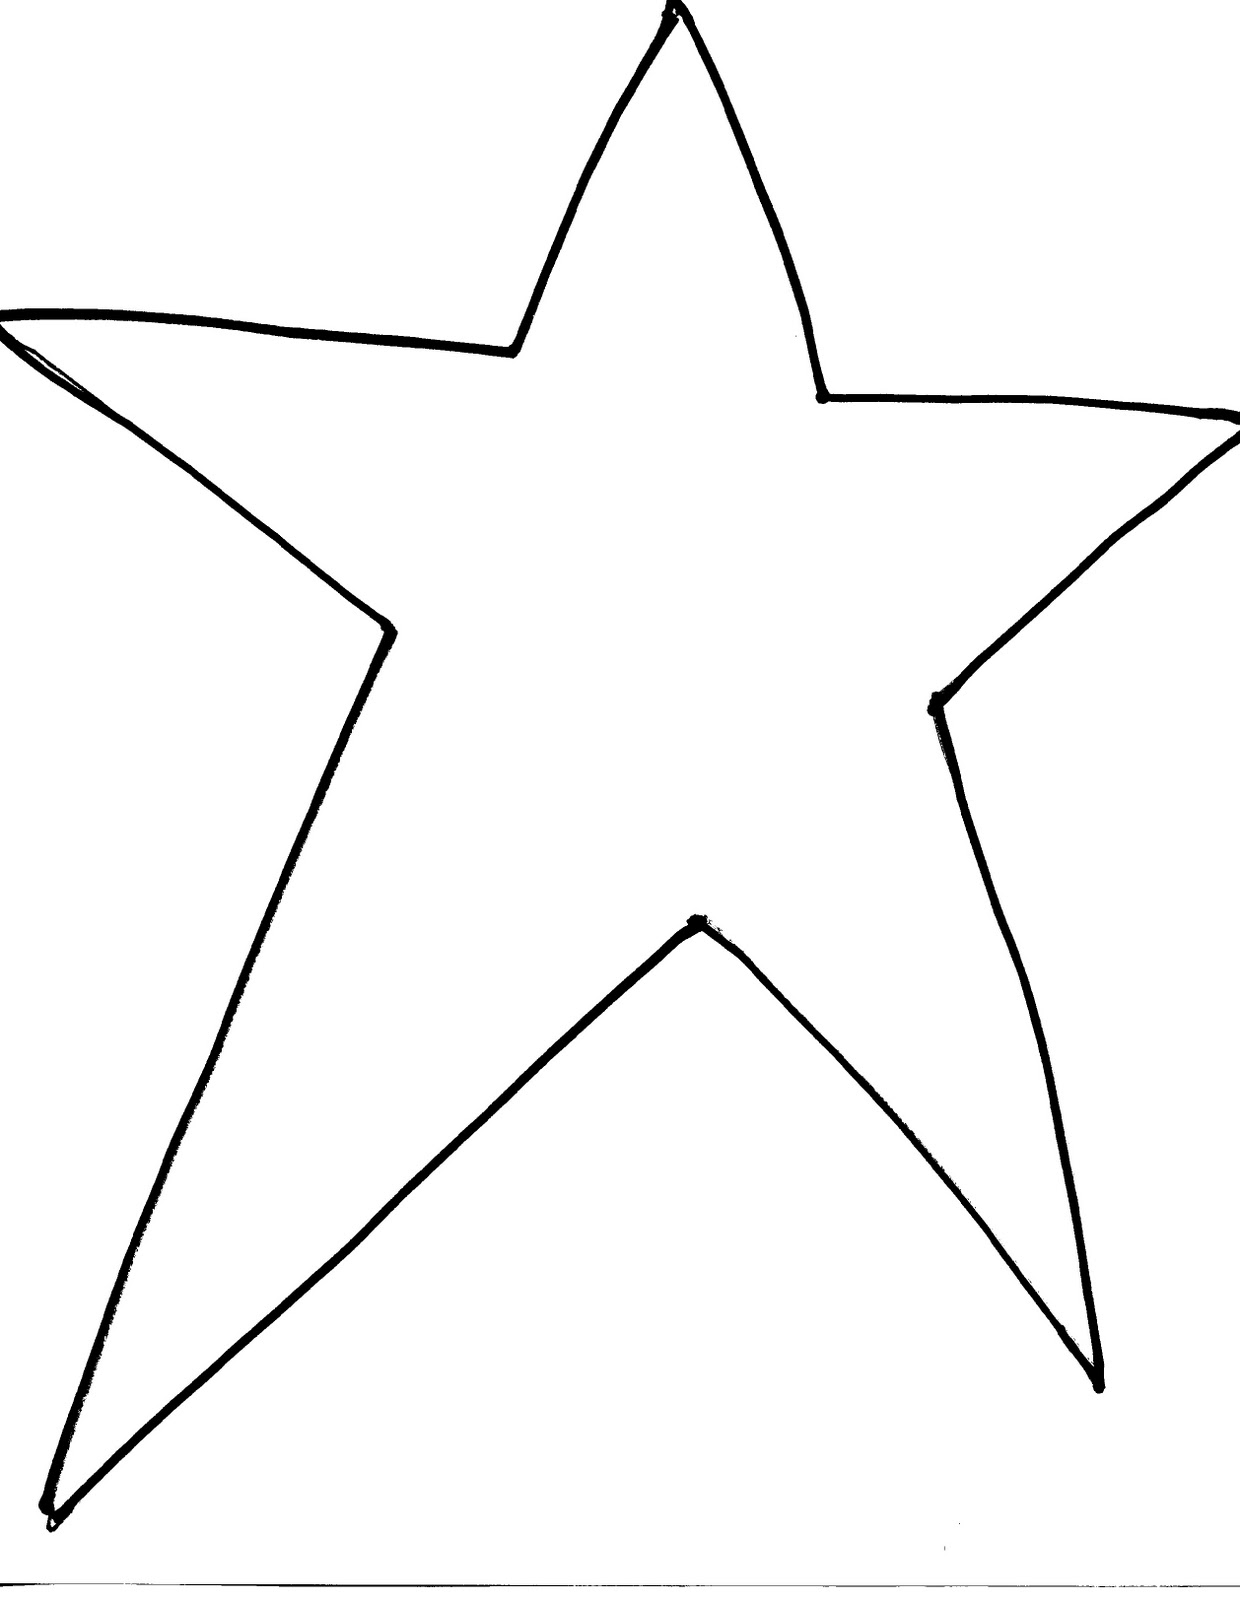 libbie-s-home-free-primitive-stencils-star-templates-star-pattern